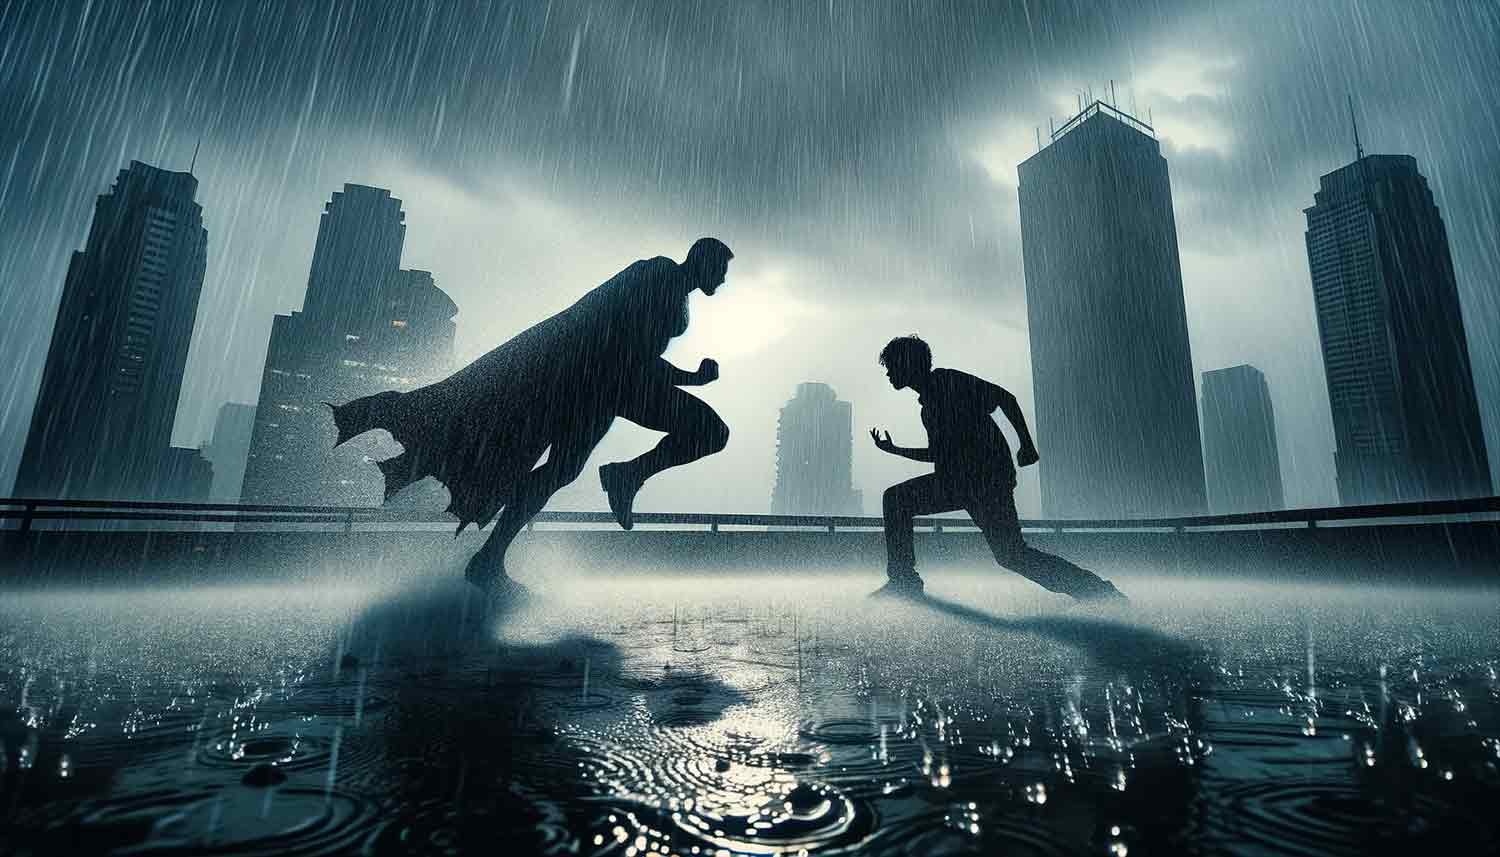 Superhero fighting enemy in the rain